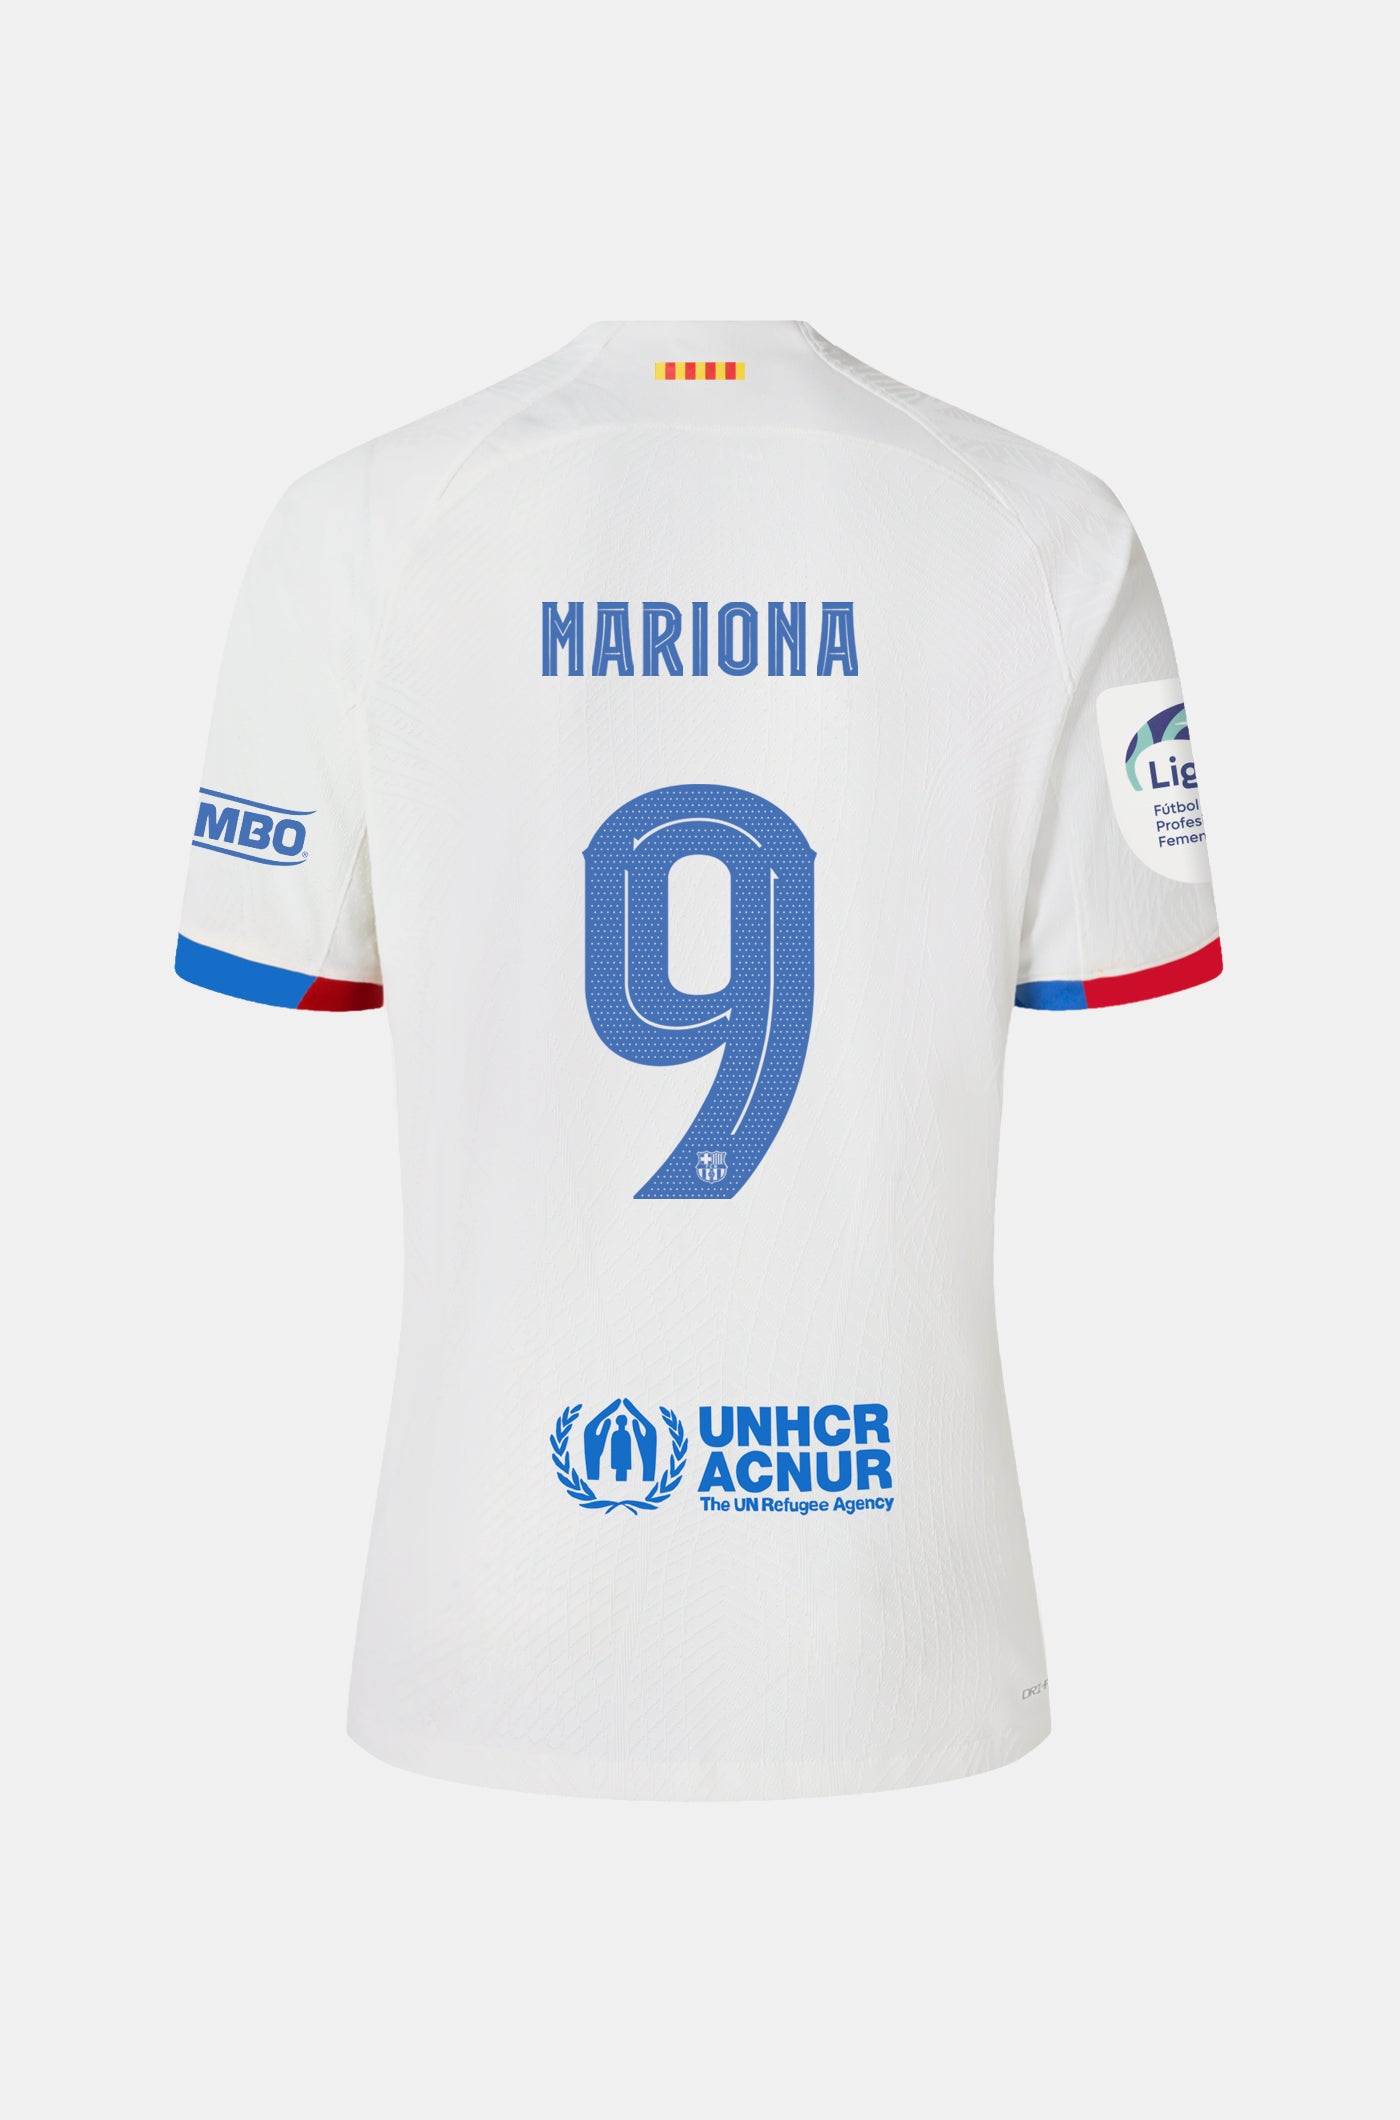 Liga F FC Barcelona away shirt 23/24 - Women  - MARIONA